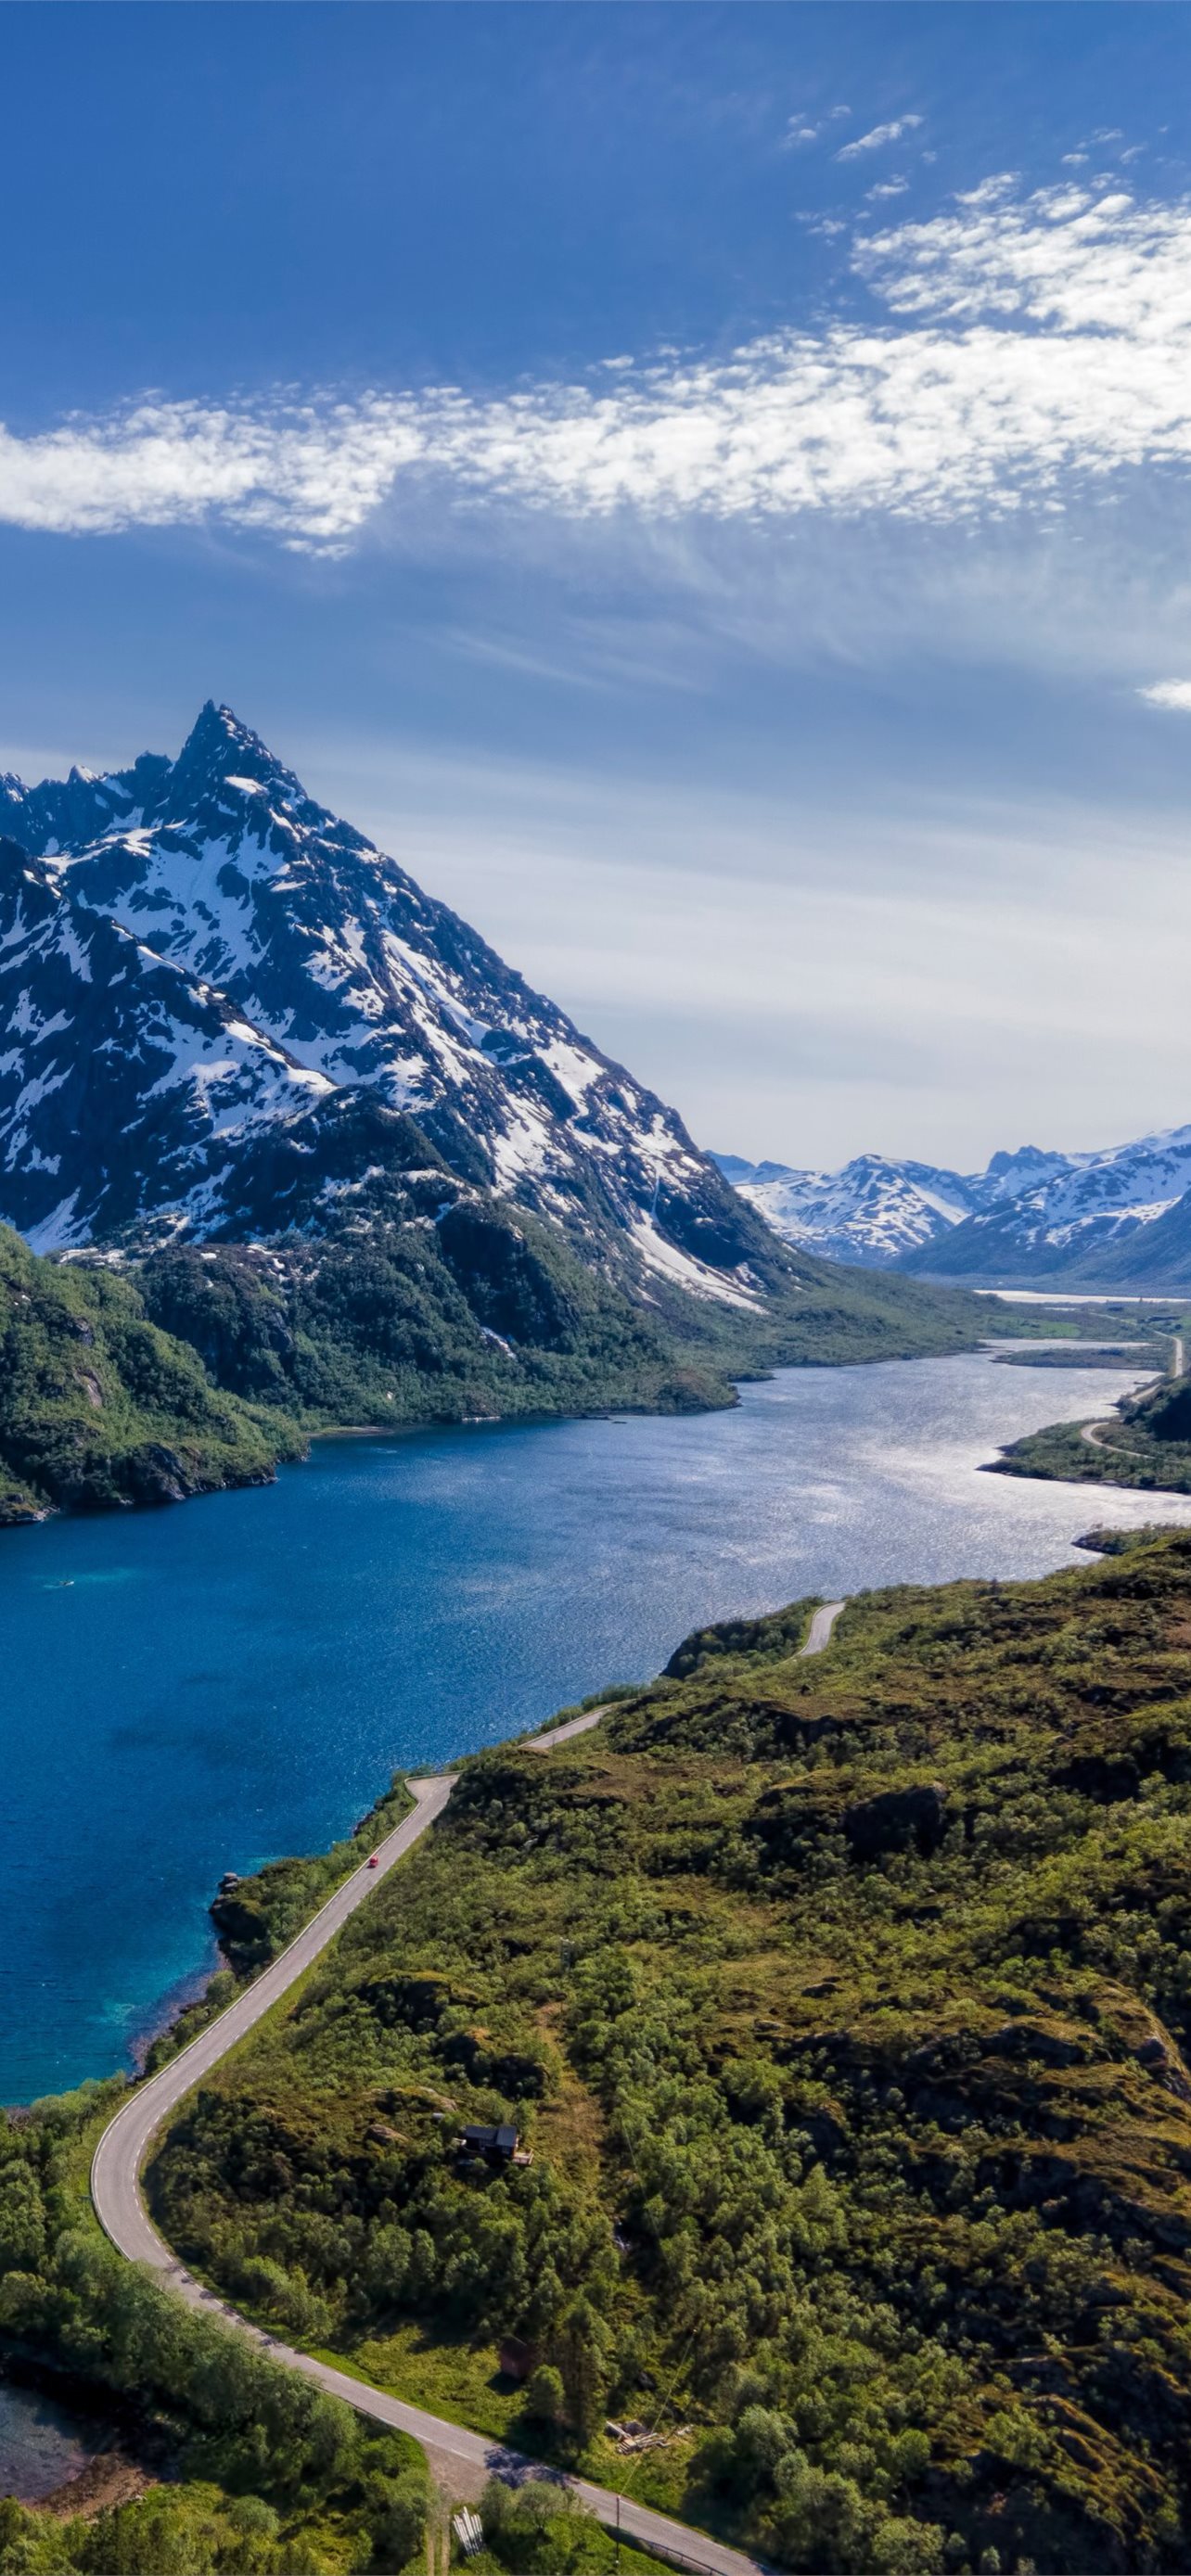 Mountains in Lofoten Norway 4k Ultra HD ID 6487 iPhone Wallpapers Free  Download